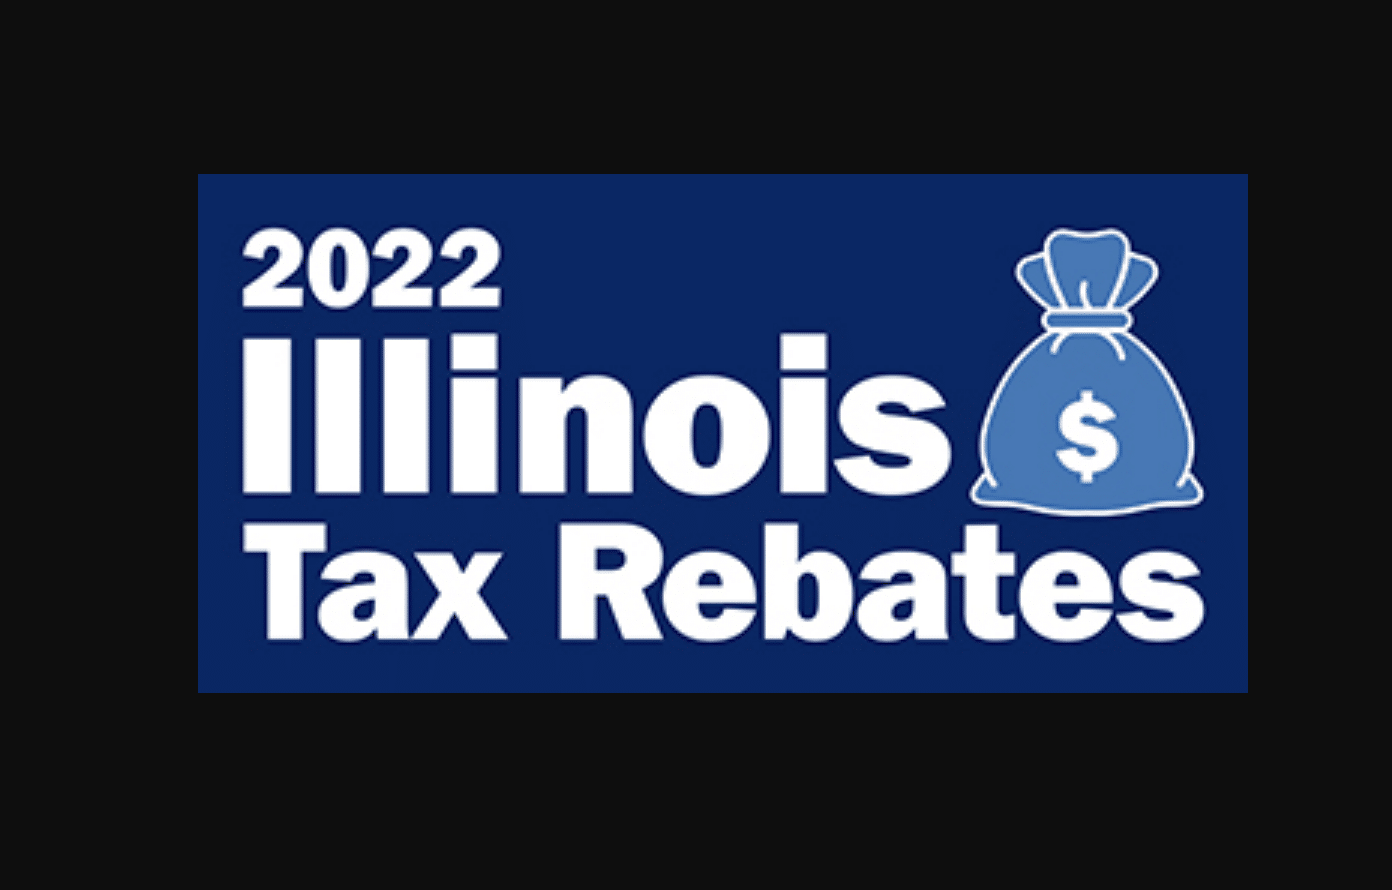 Tax Rebate Payments Begin Republic Times News